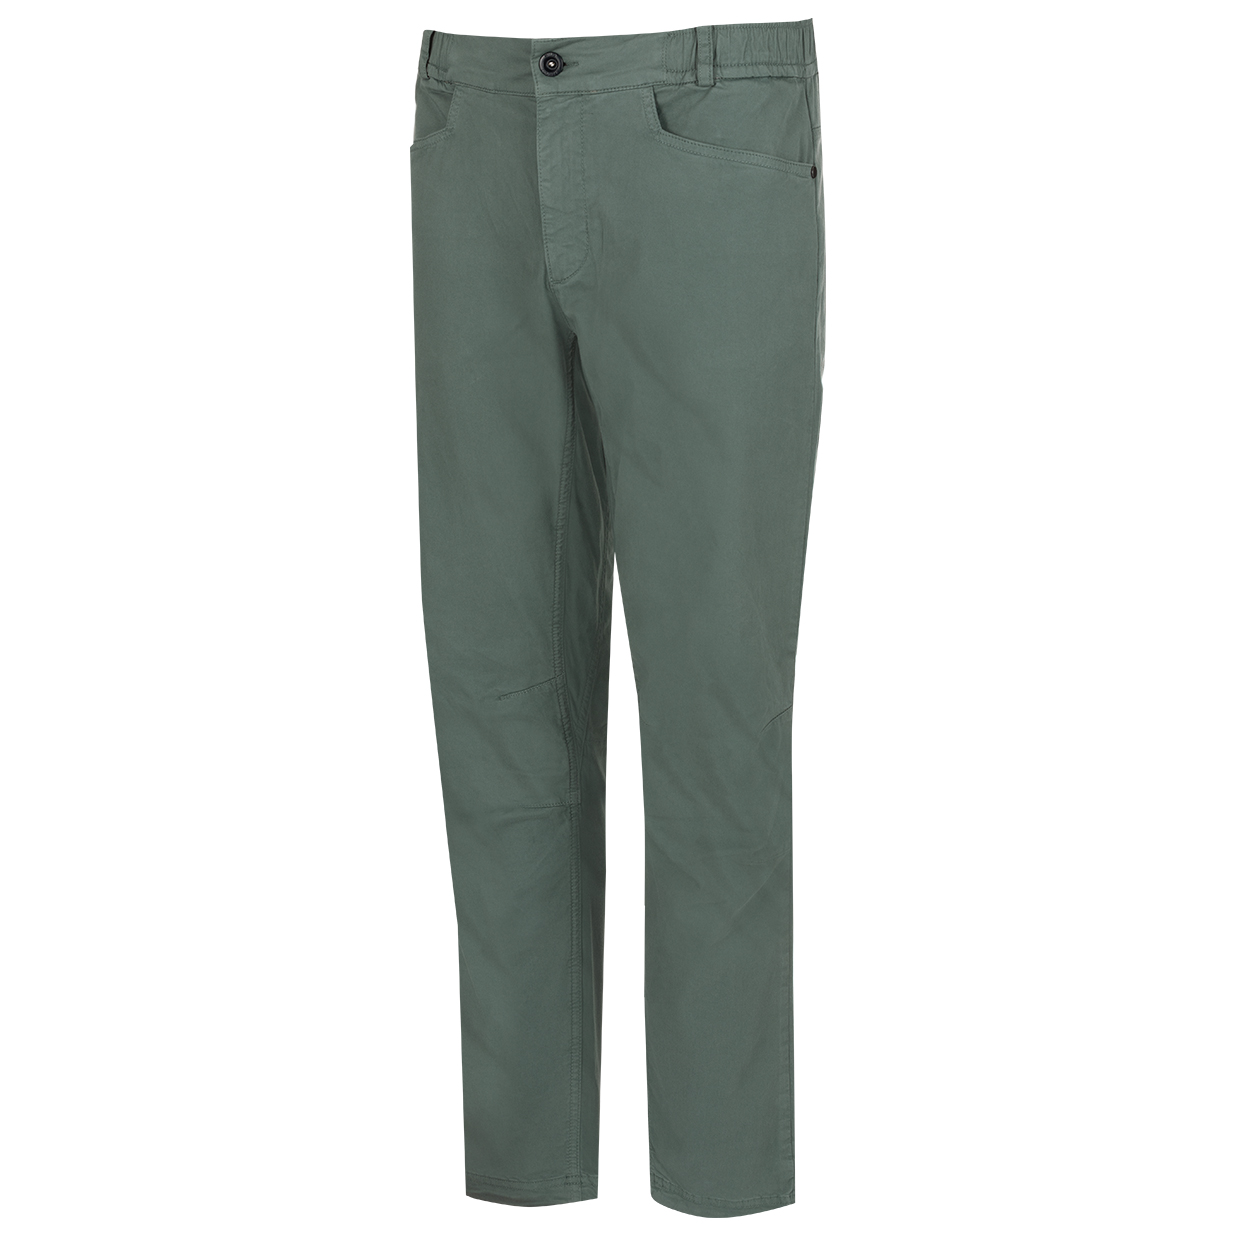 Альпинистские штаны Wild Country Stamina 2, цвет Marsh женские брюки stamina 2 wild country зеленый